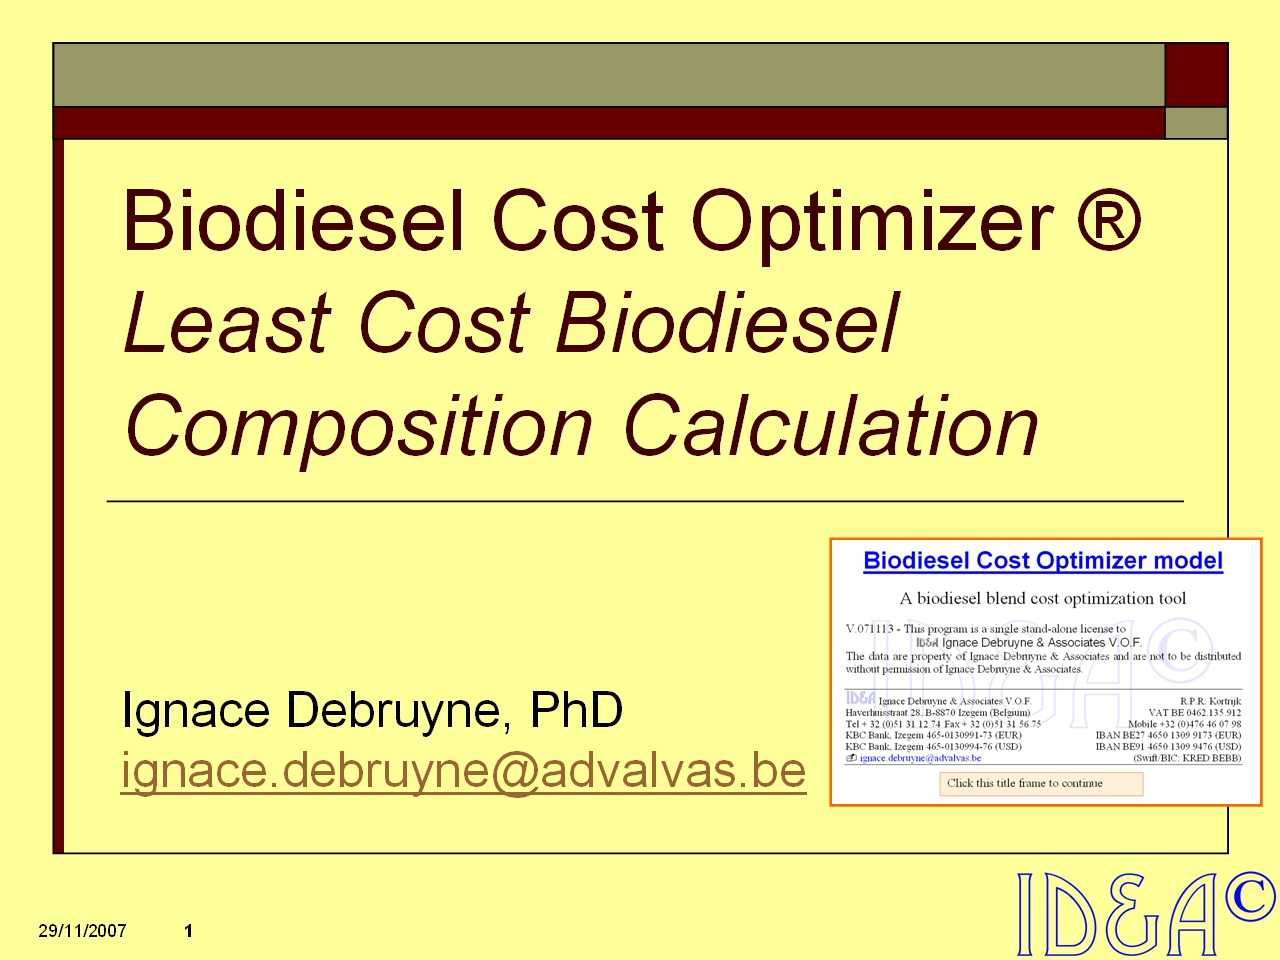 Biodesel Cost Optimizer information pack